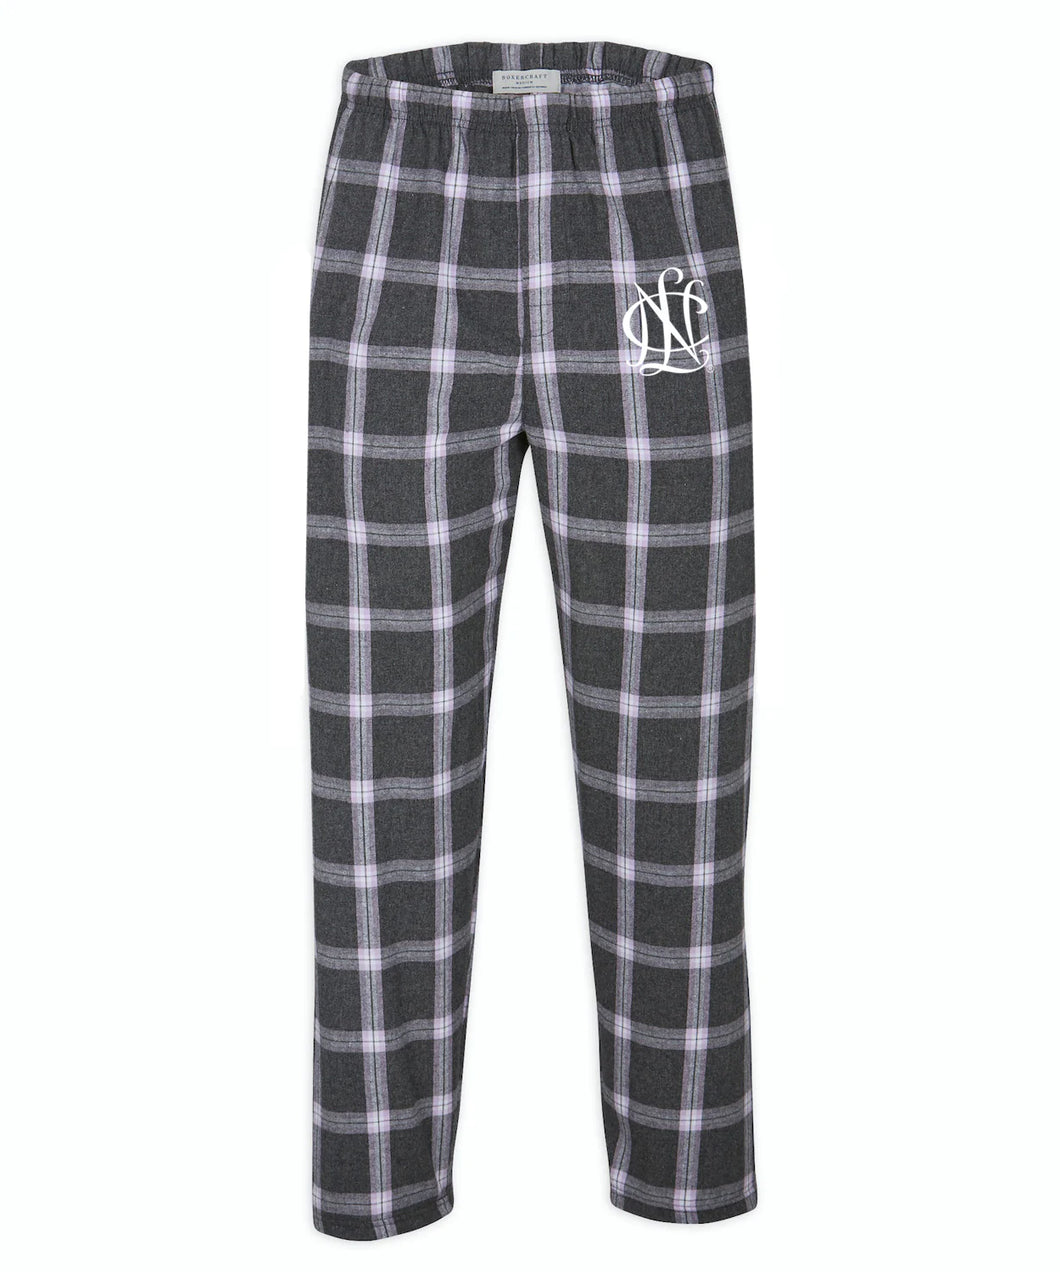 Pants - Pajama pants, Flannel, Charcoal/Lavender